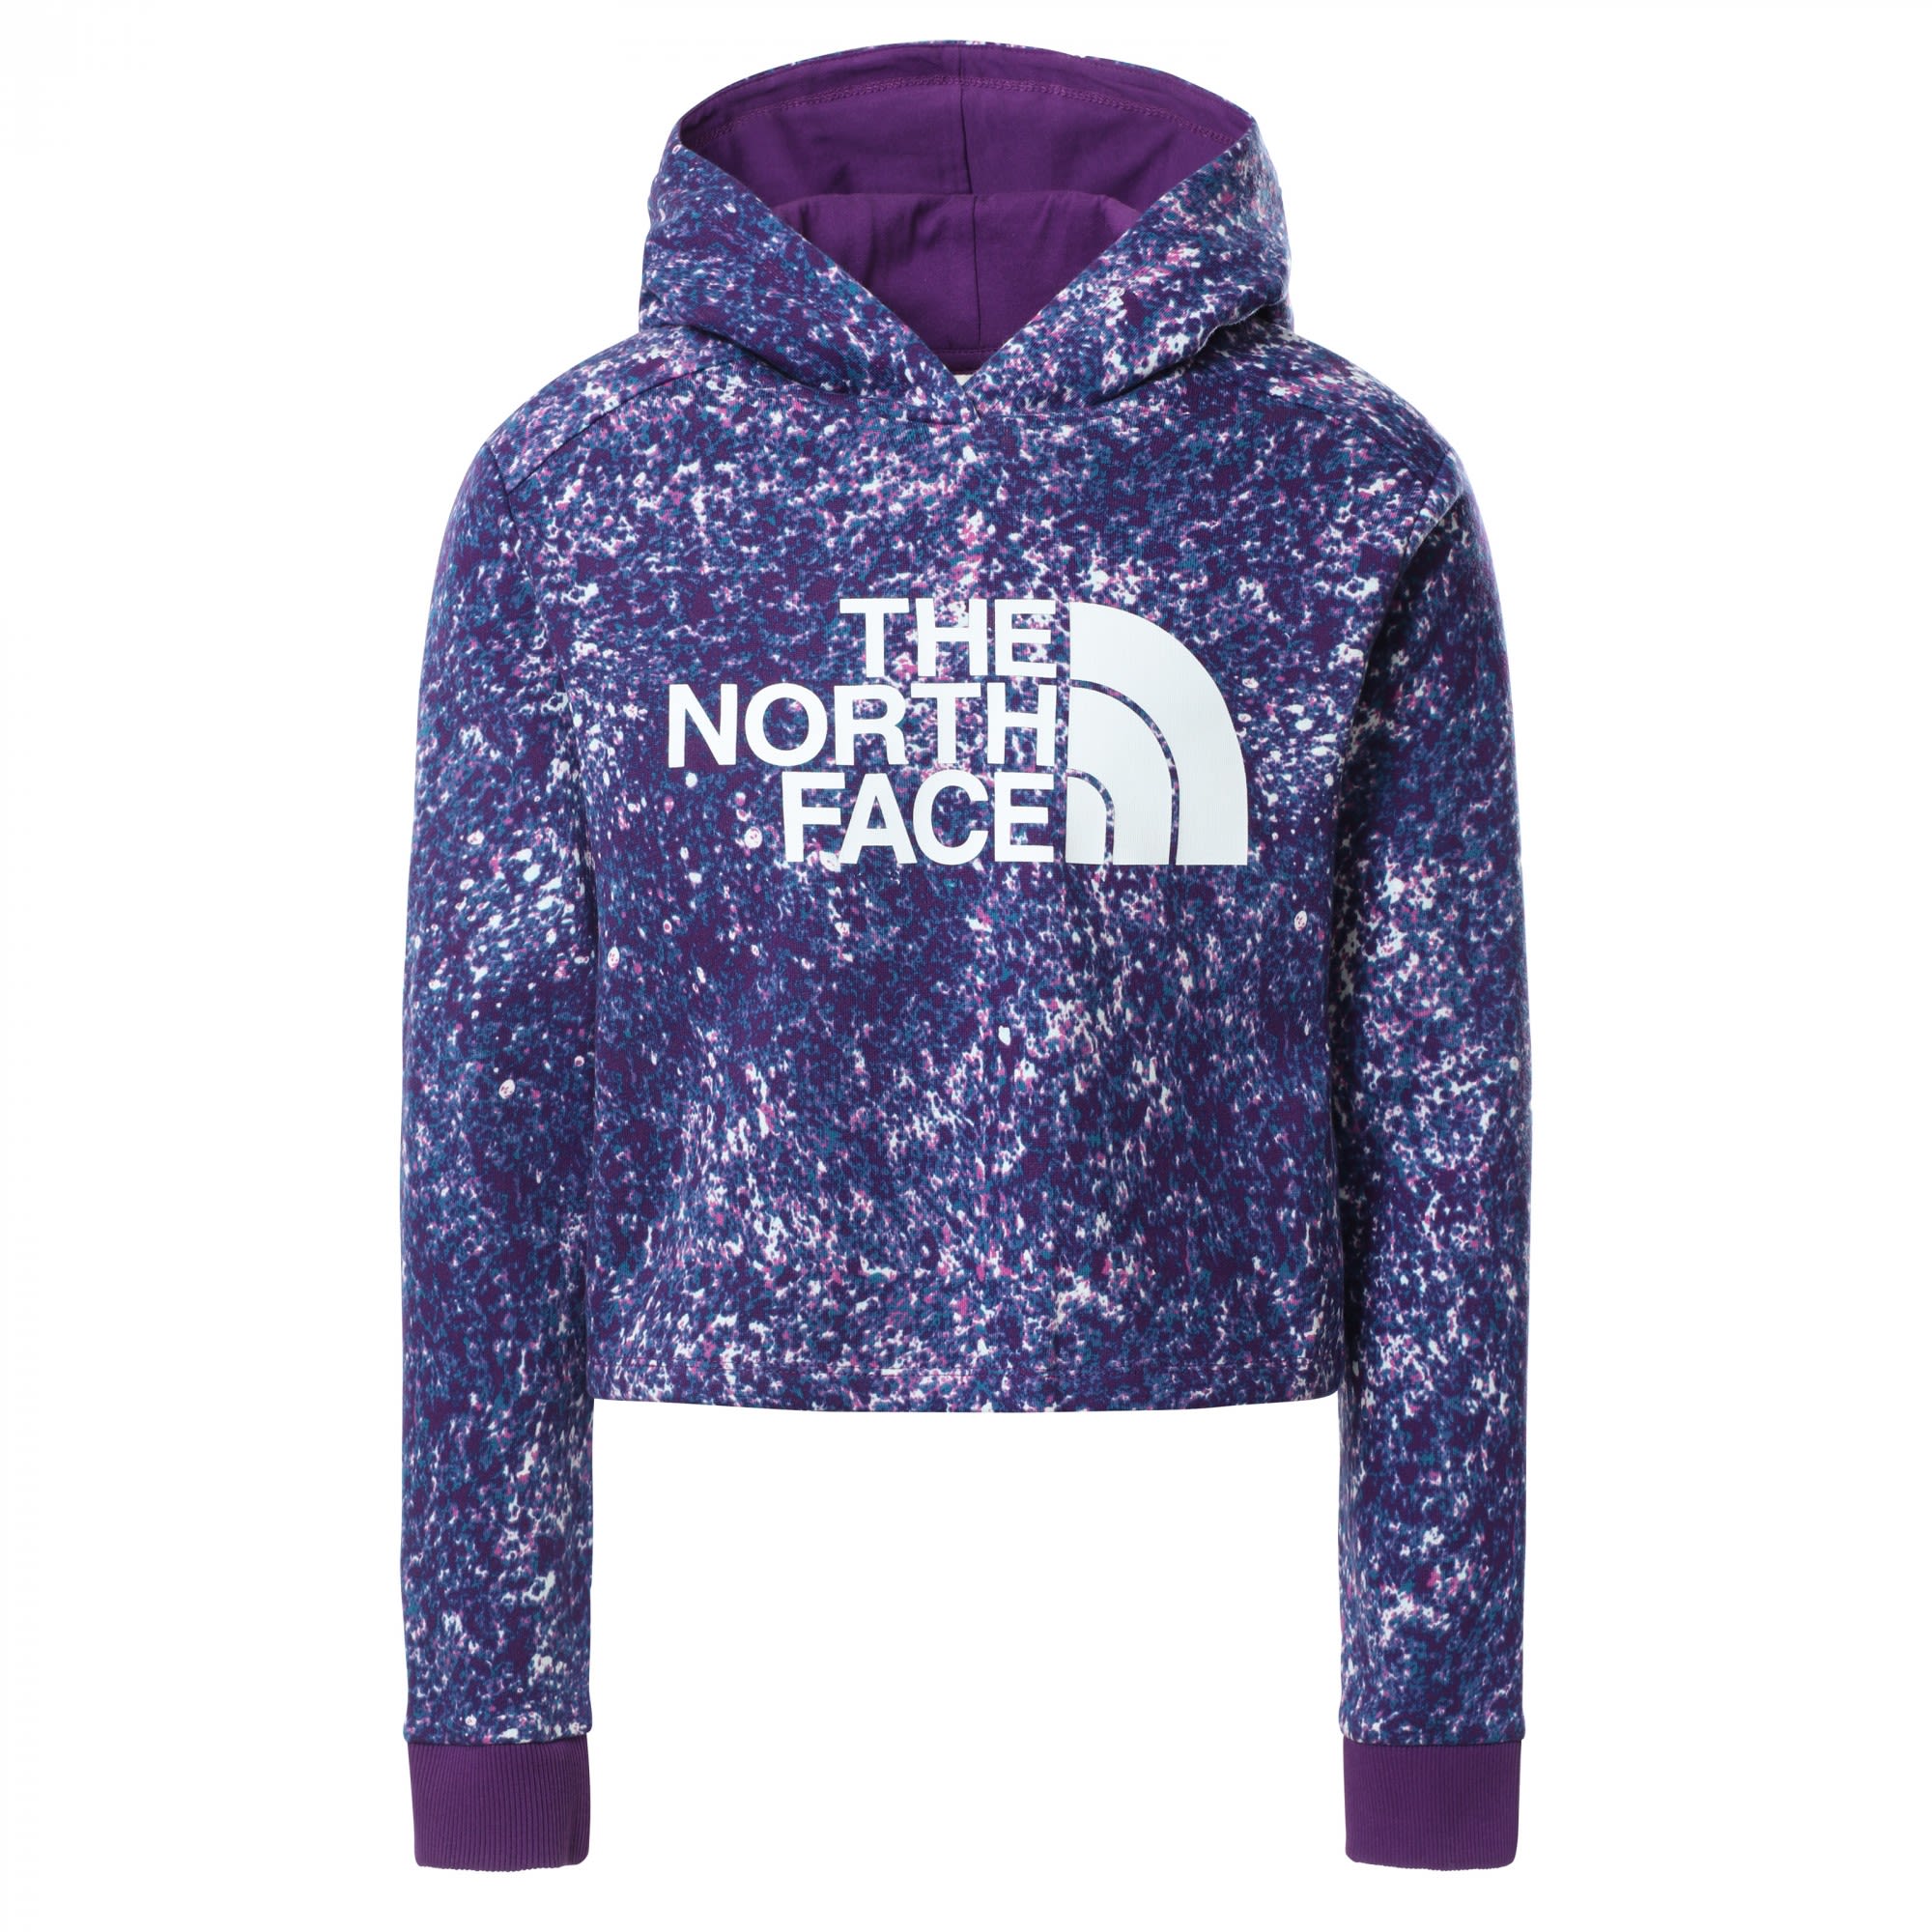 The North Face Leichter bauchfreier Mädchen Logo Kapuzenpullover Gravity Purple Paint Spots Print